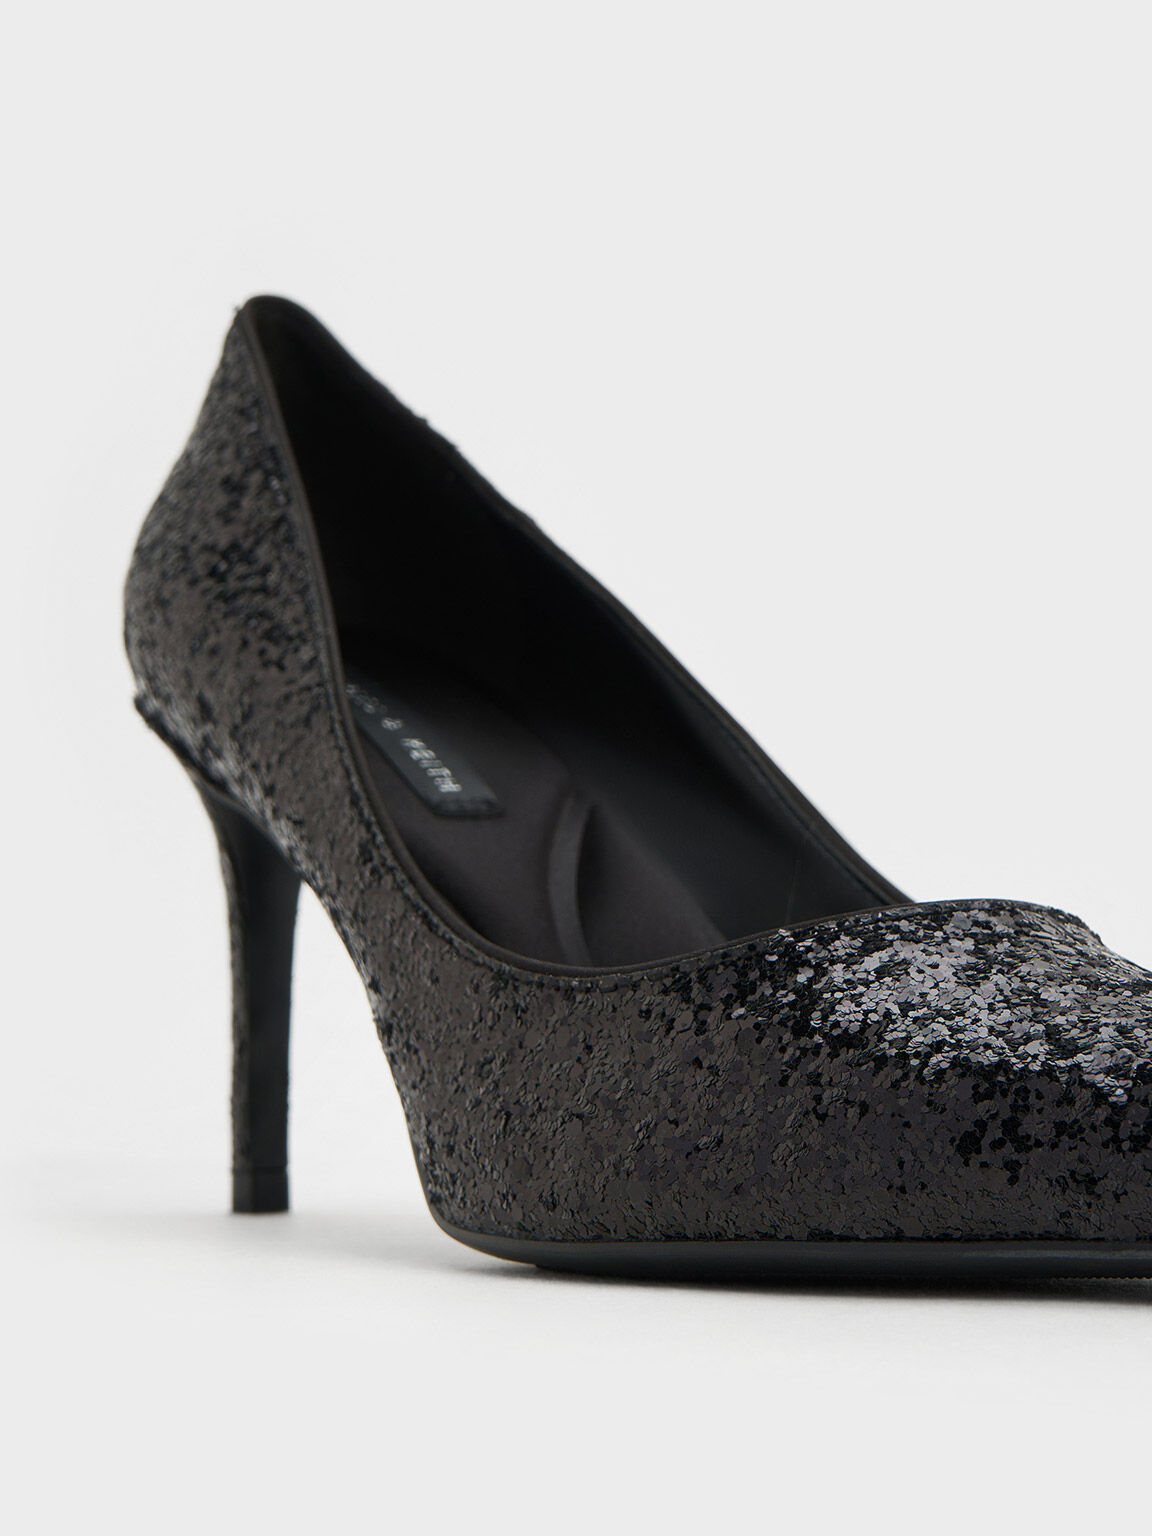 Belle & Lucy Stylish Black Glitter Midi Heels | Cinderella Shoes